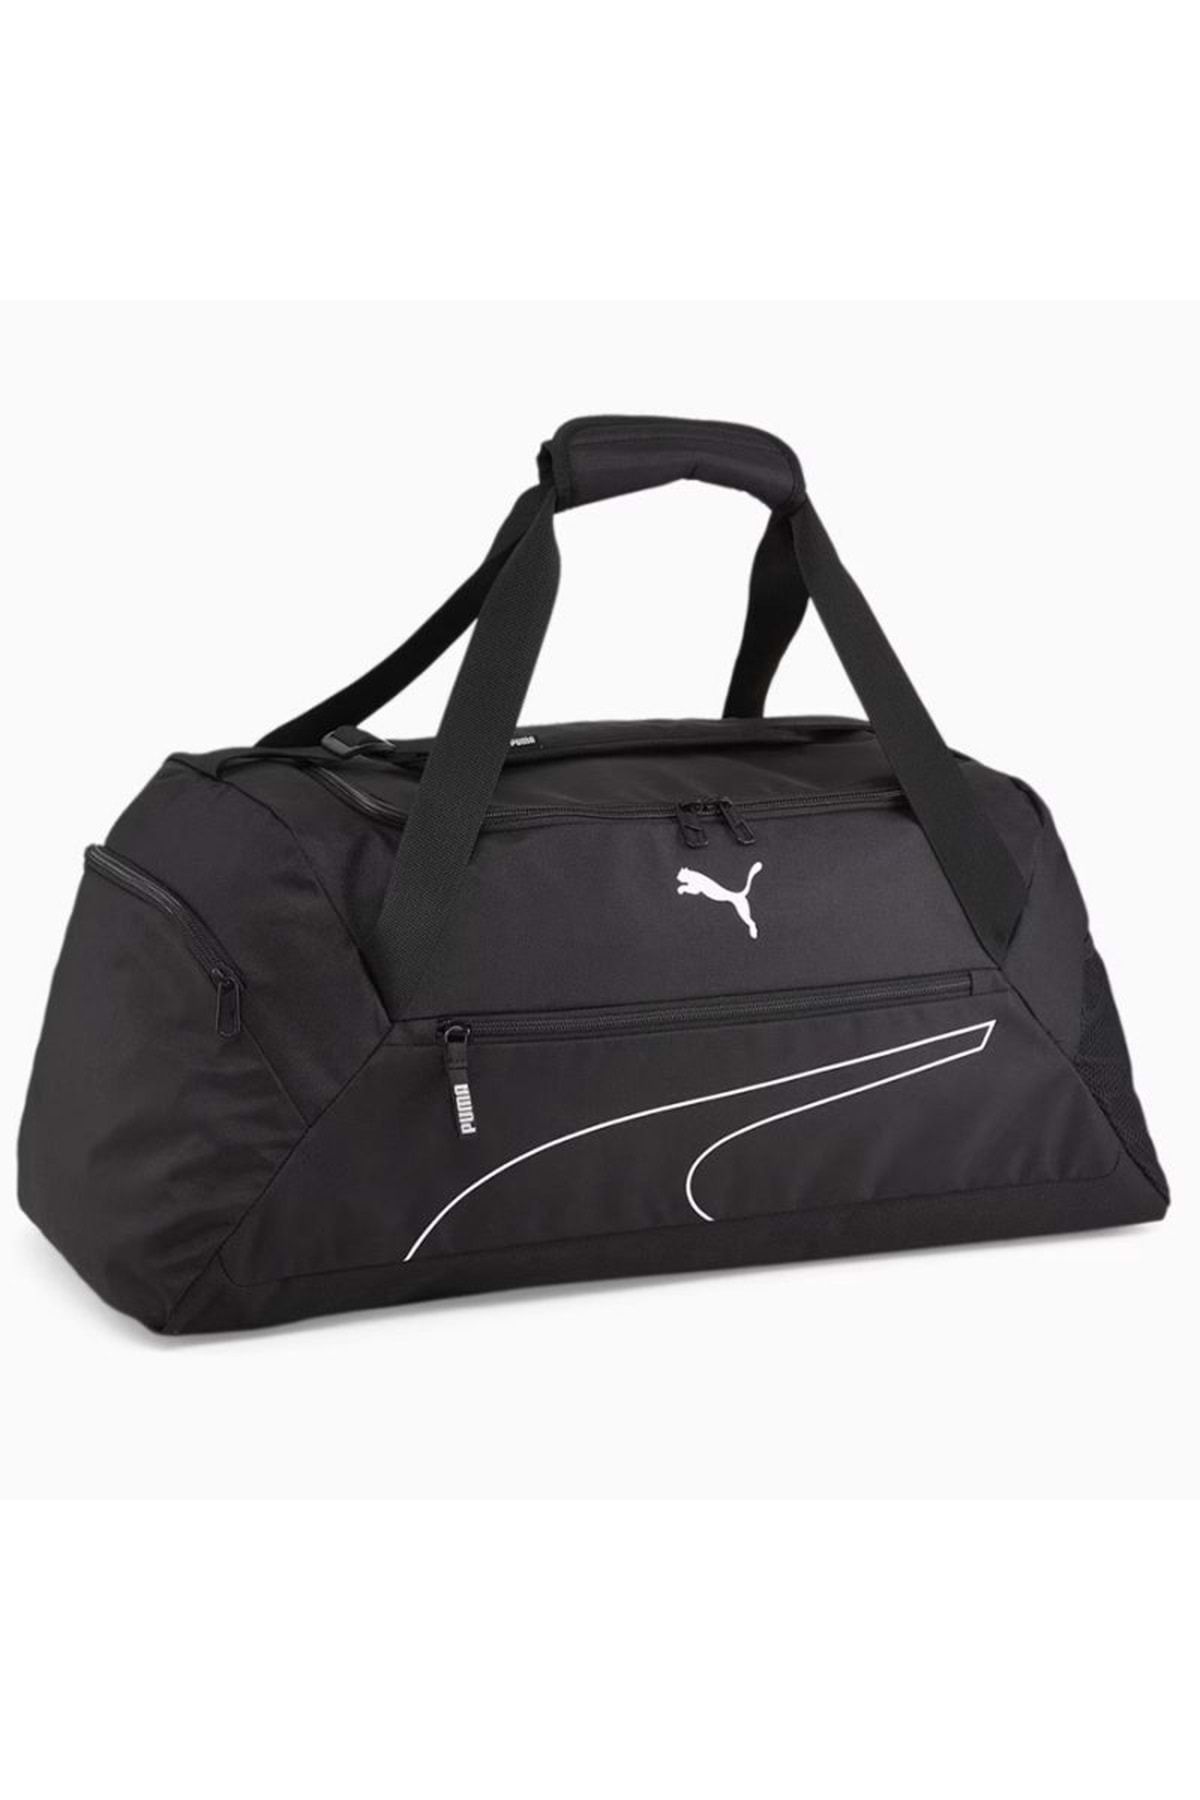 Puma 090333-01 Fundamentals Sports Bag M Unisex Spor Çanta Siyah